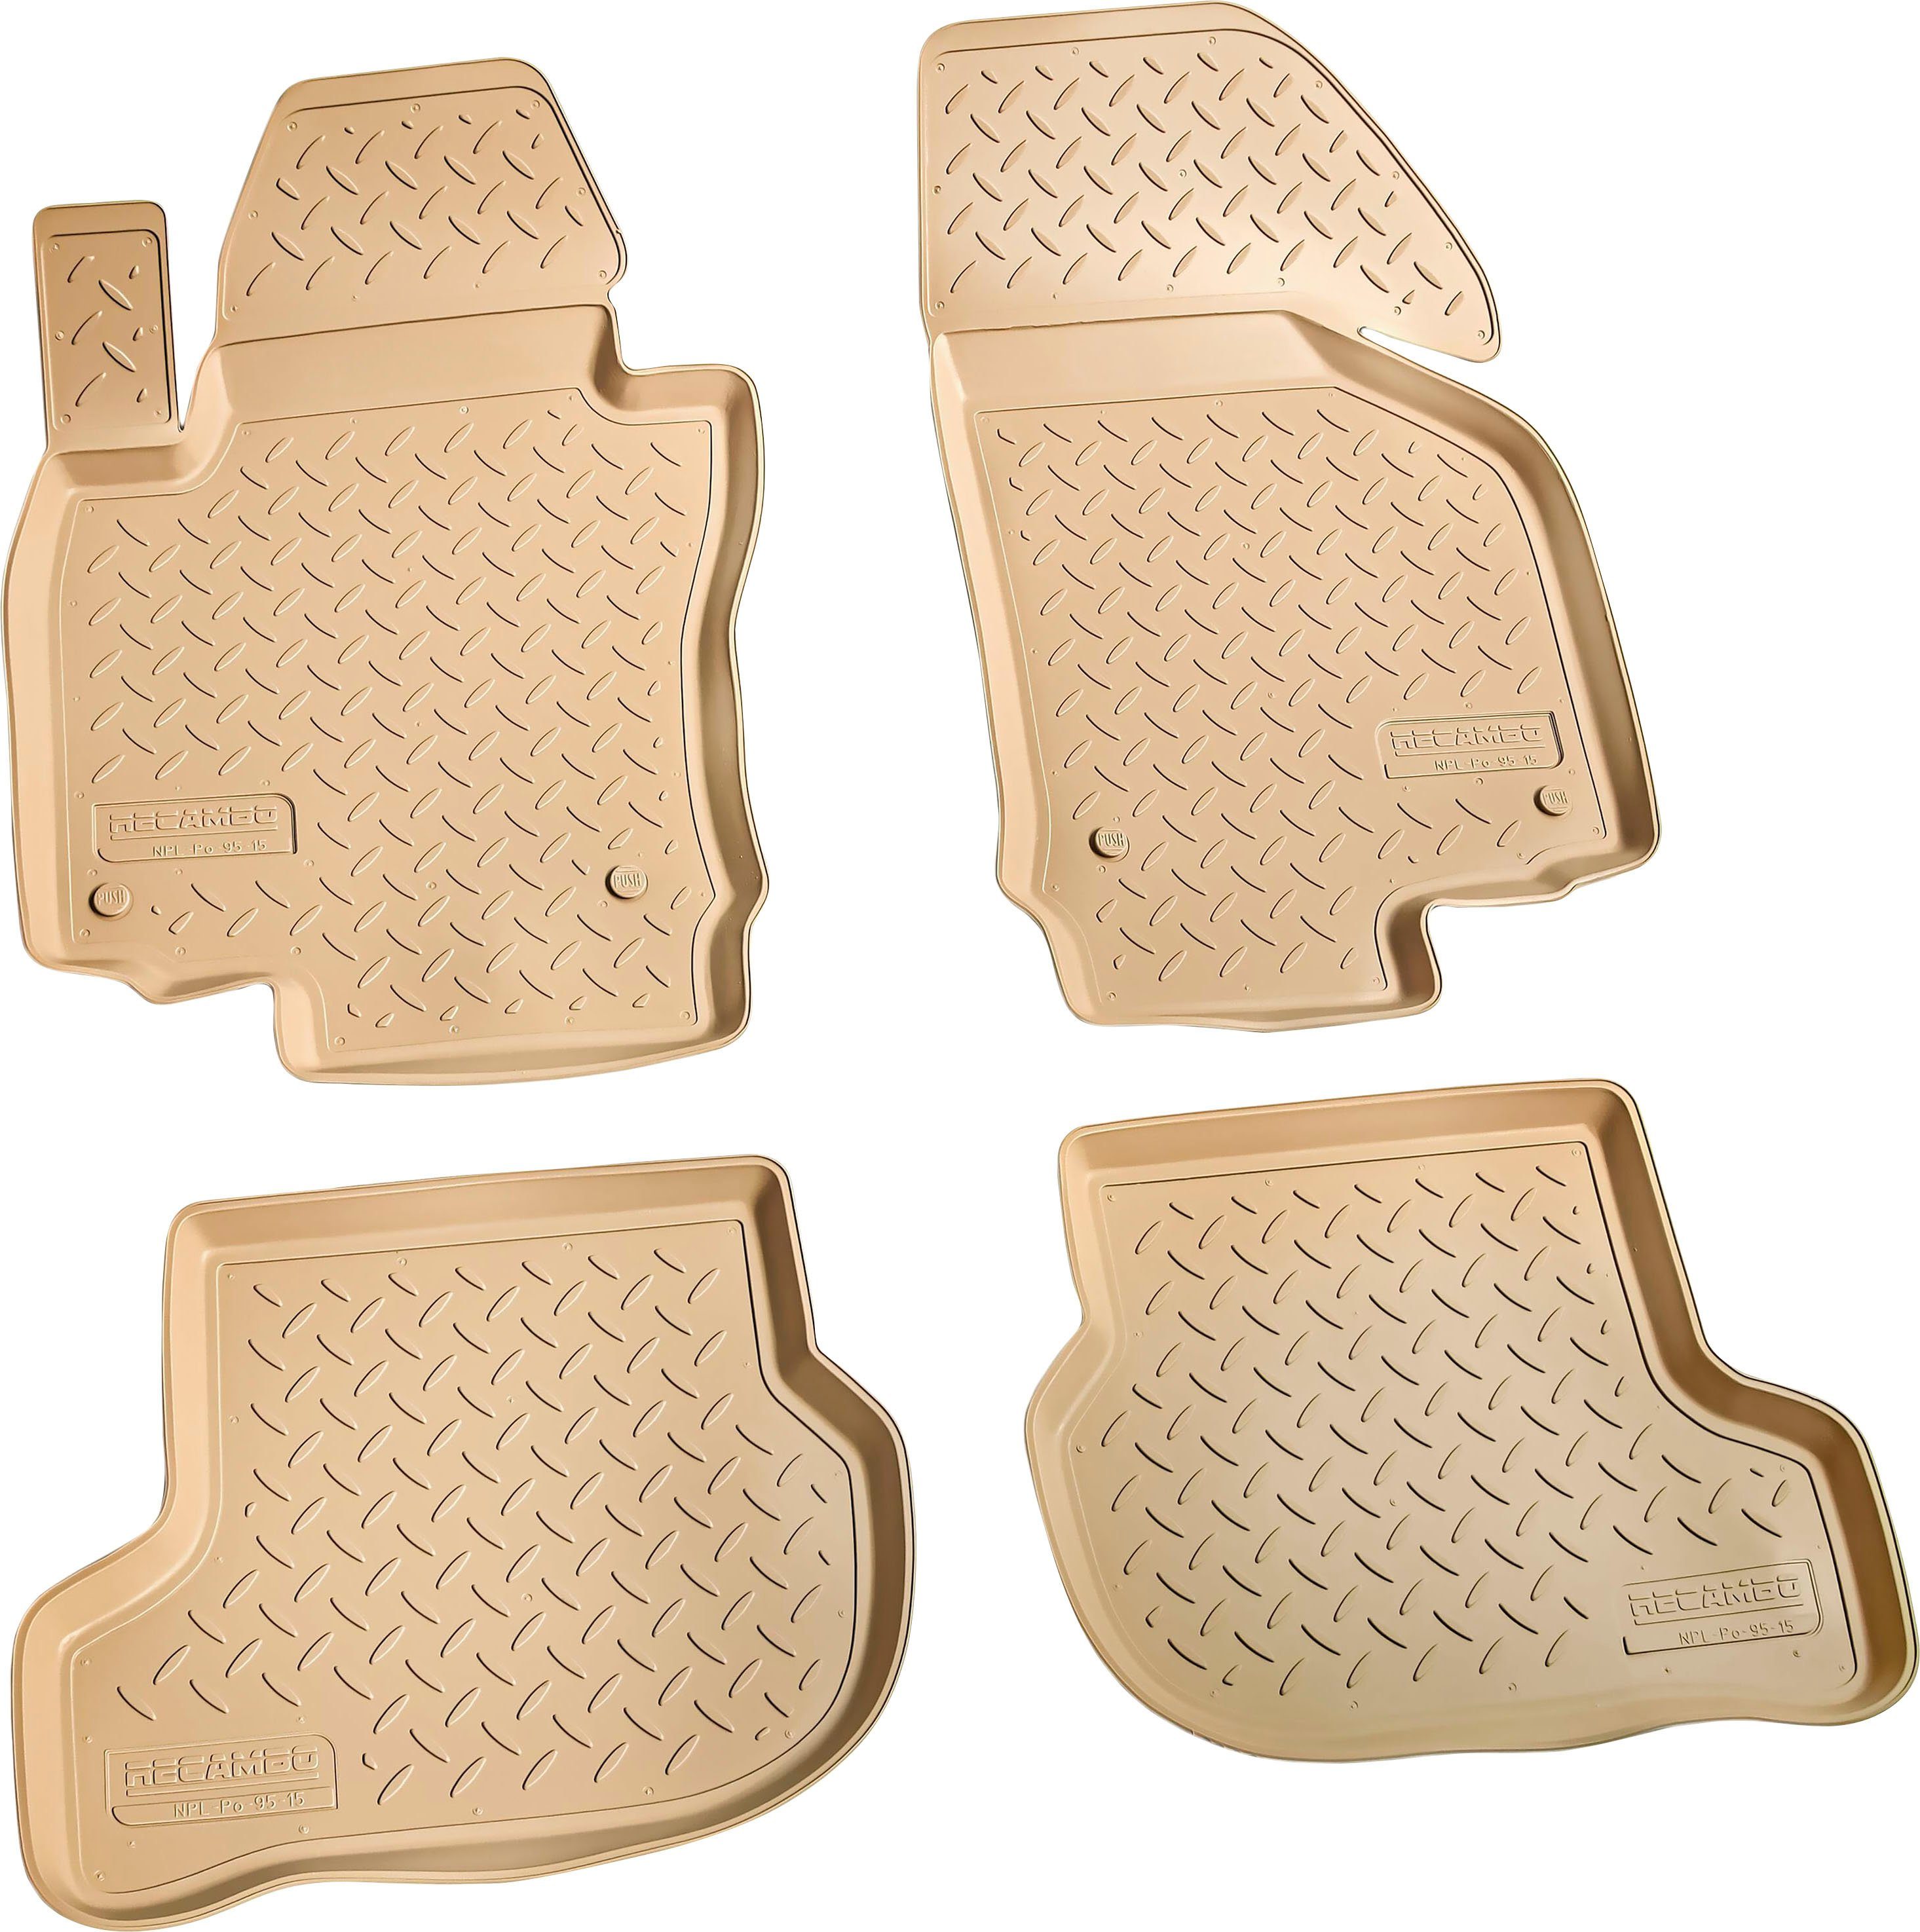 RECAMBO Passform-Fußmatten CustomComforts (4 St), für SEAT Leon, II Typ 1P  2005 - 2012, perfekte Passform, Hohe Gummiqualität (TPE Material) – längere  Lebensdauer der Automatten | Automatten